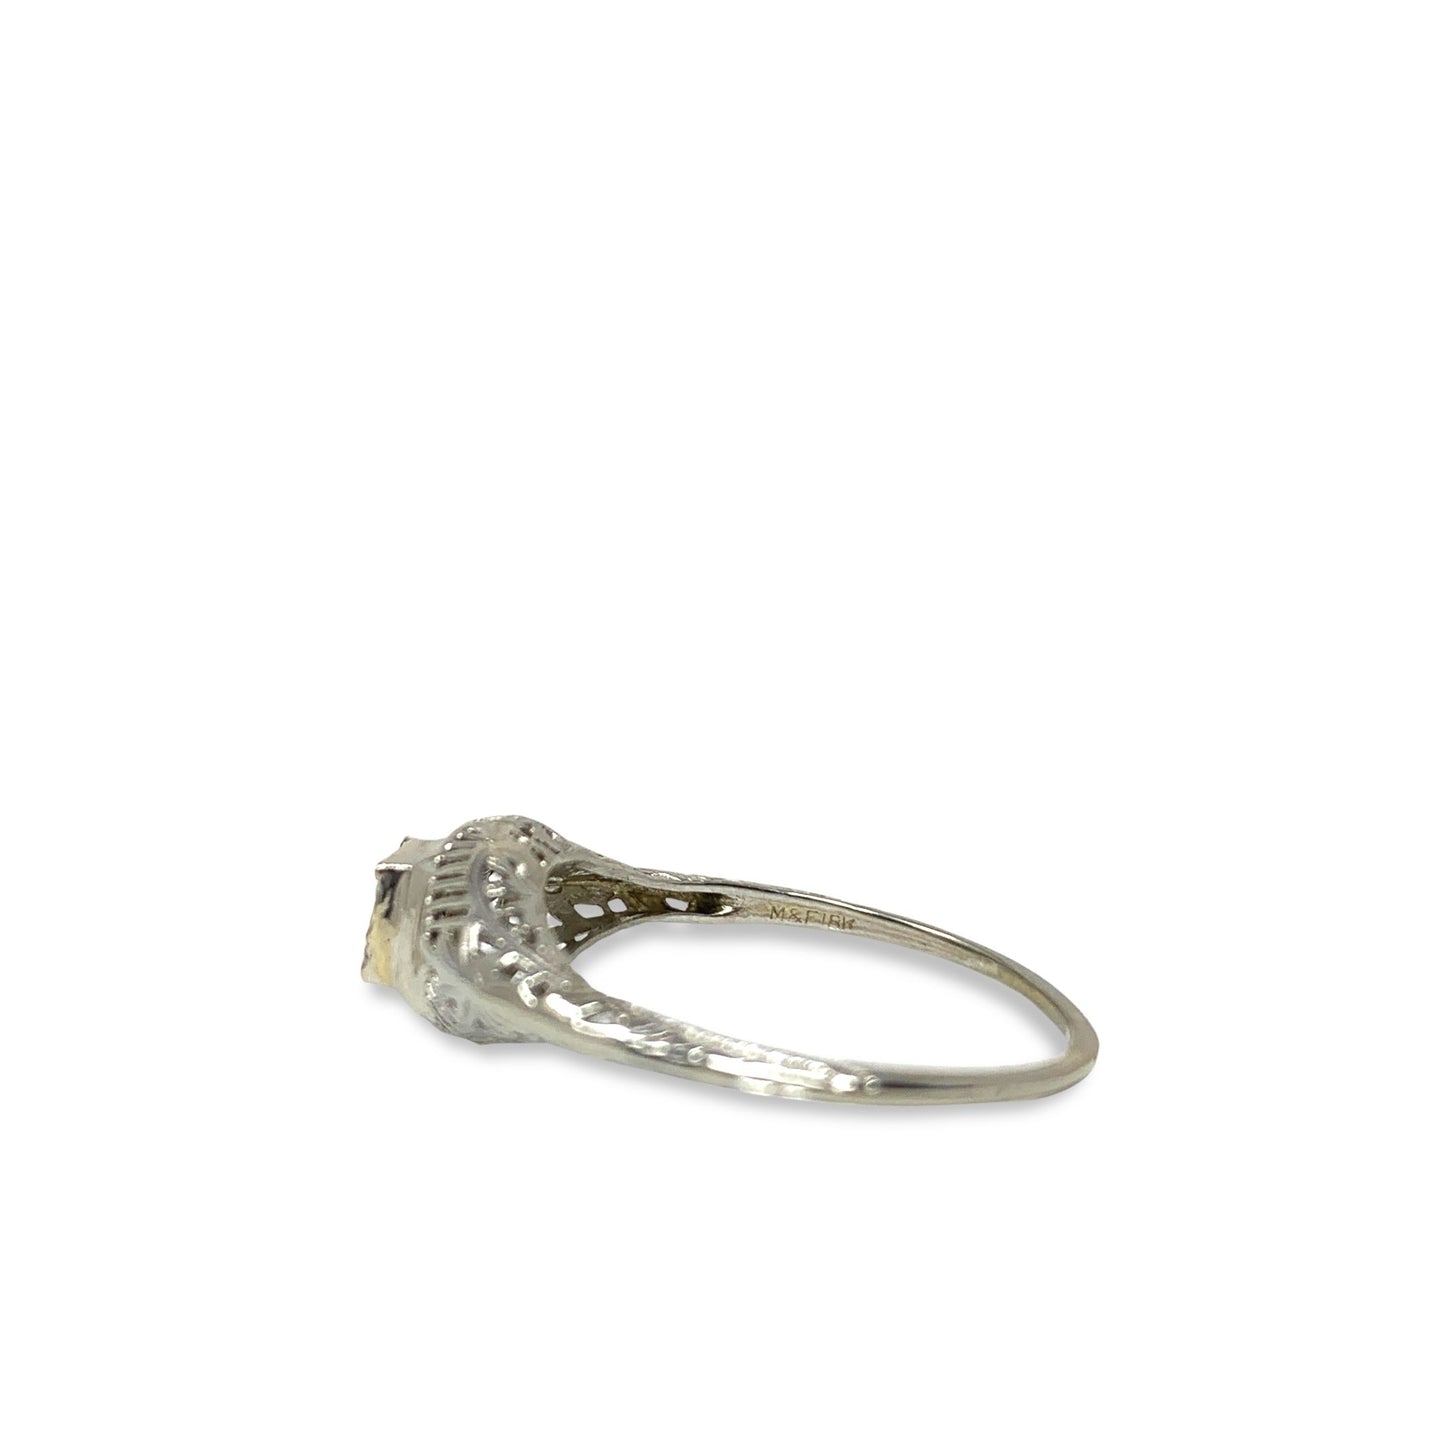 M & F 1920's 18K White Gold Filigree Solitaire 0.2ct Diamond Ring